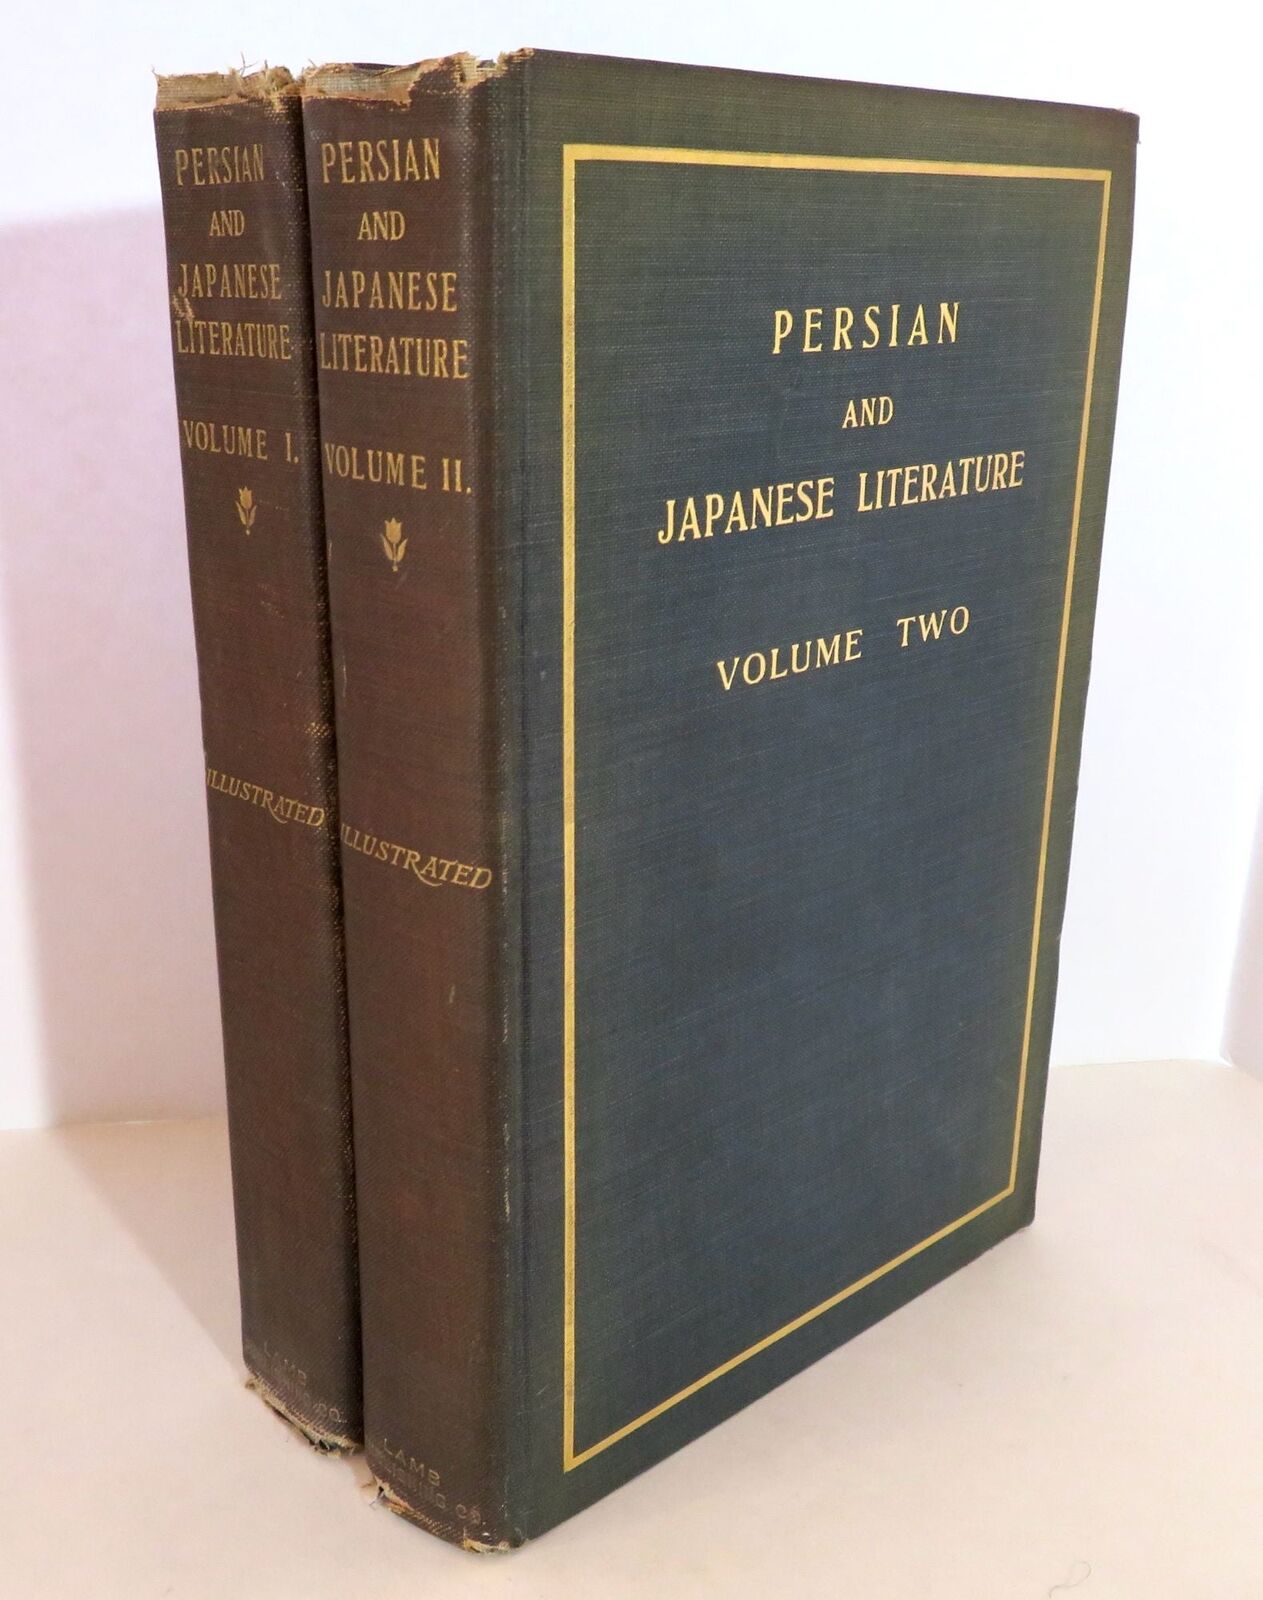 Richard J H Gottheil / Persian and Japanese Literature Two Volume Set 1900